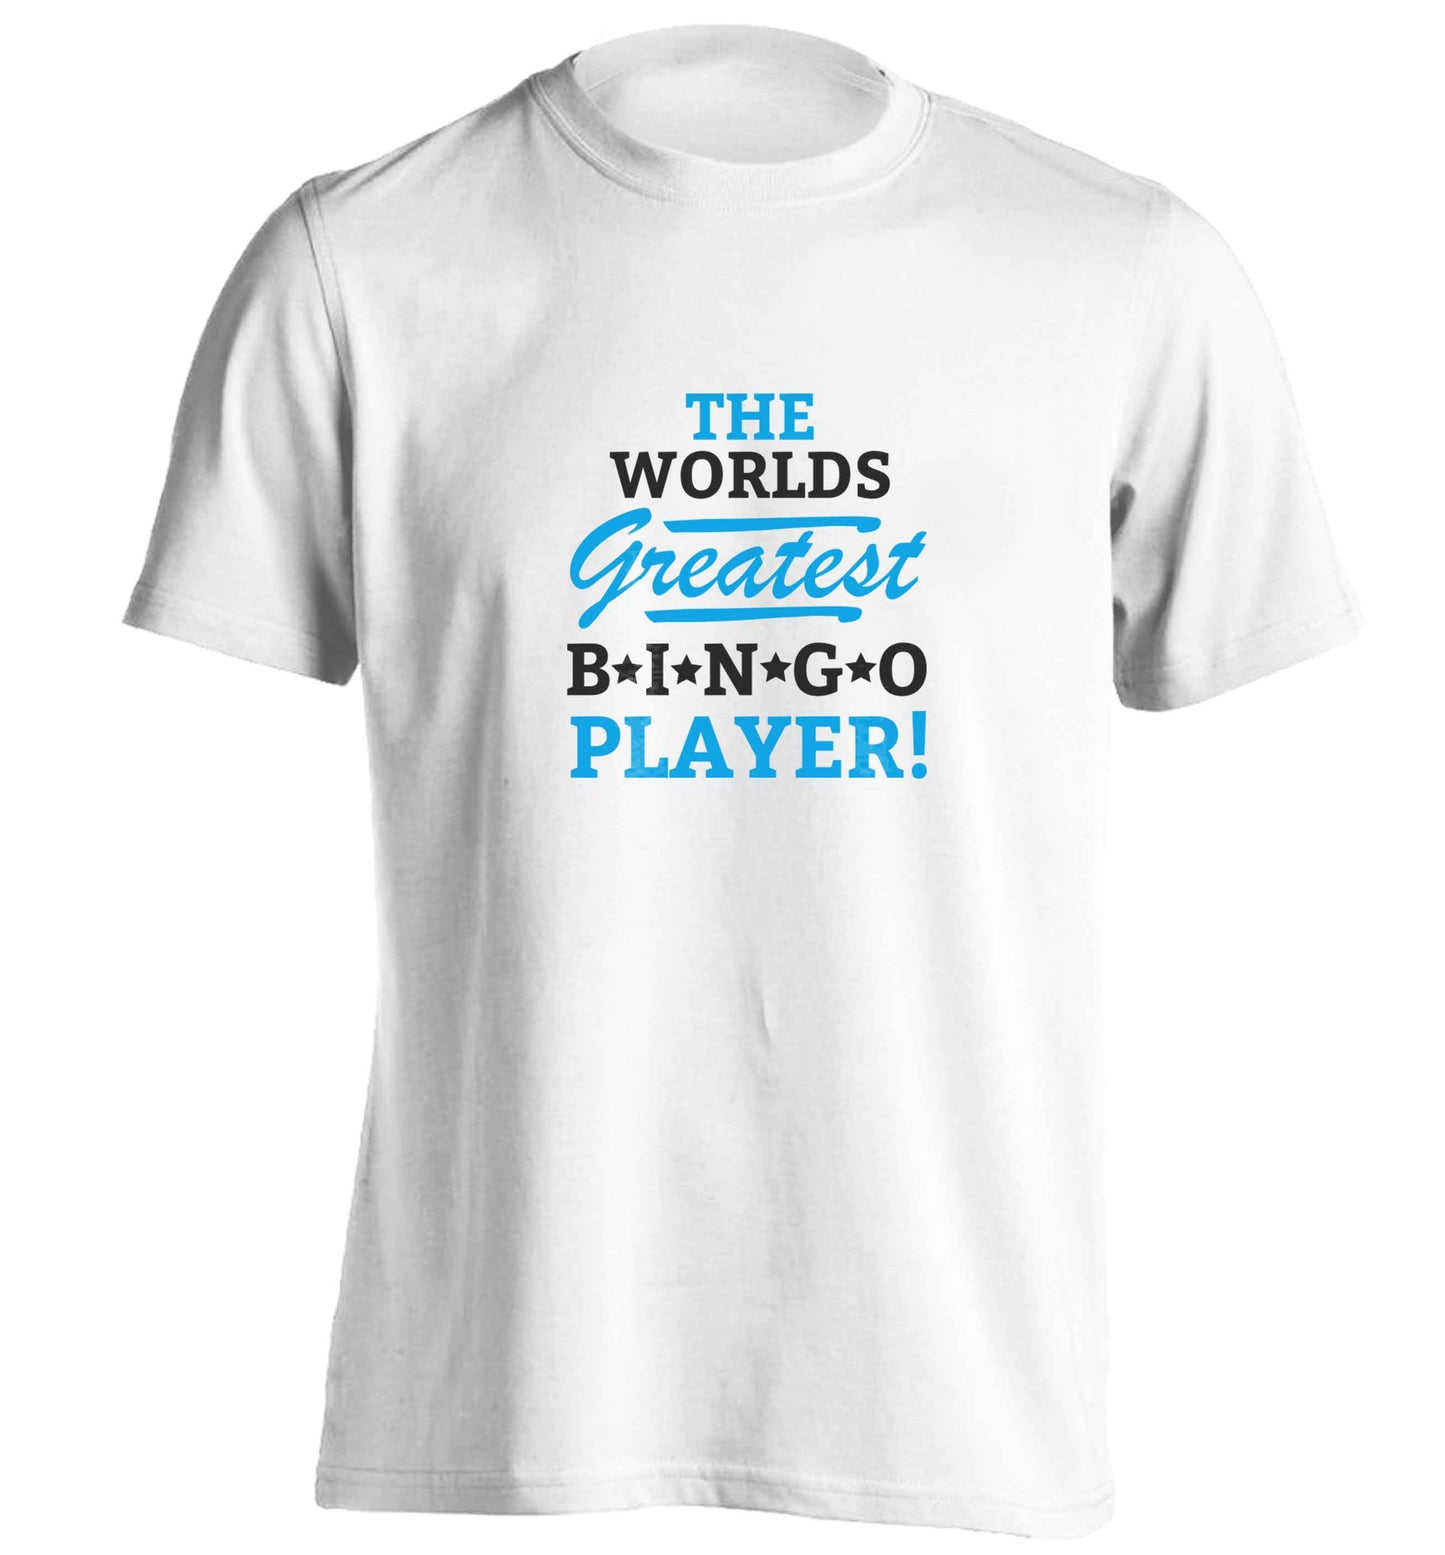 Worlds greatest bingo player adults unisex white Tshirt 2XL